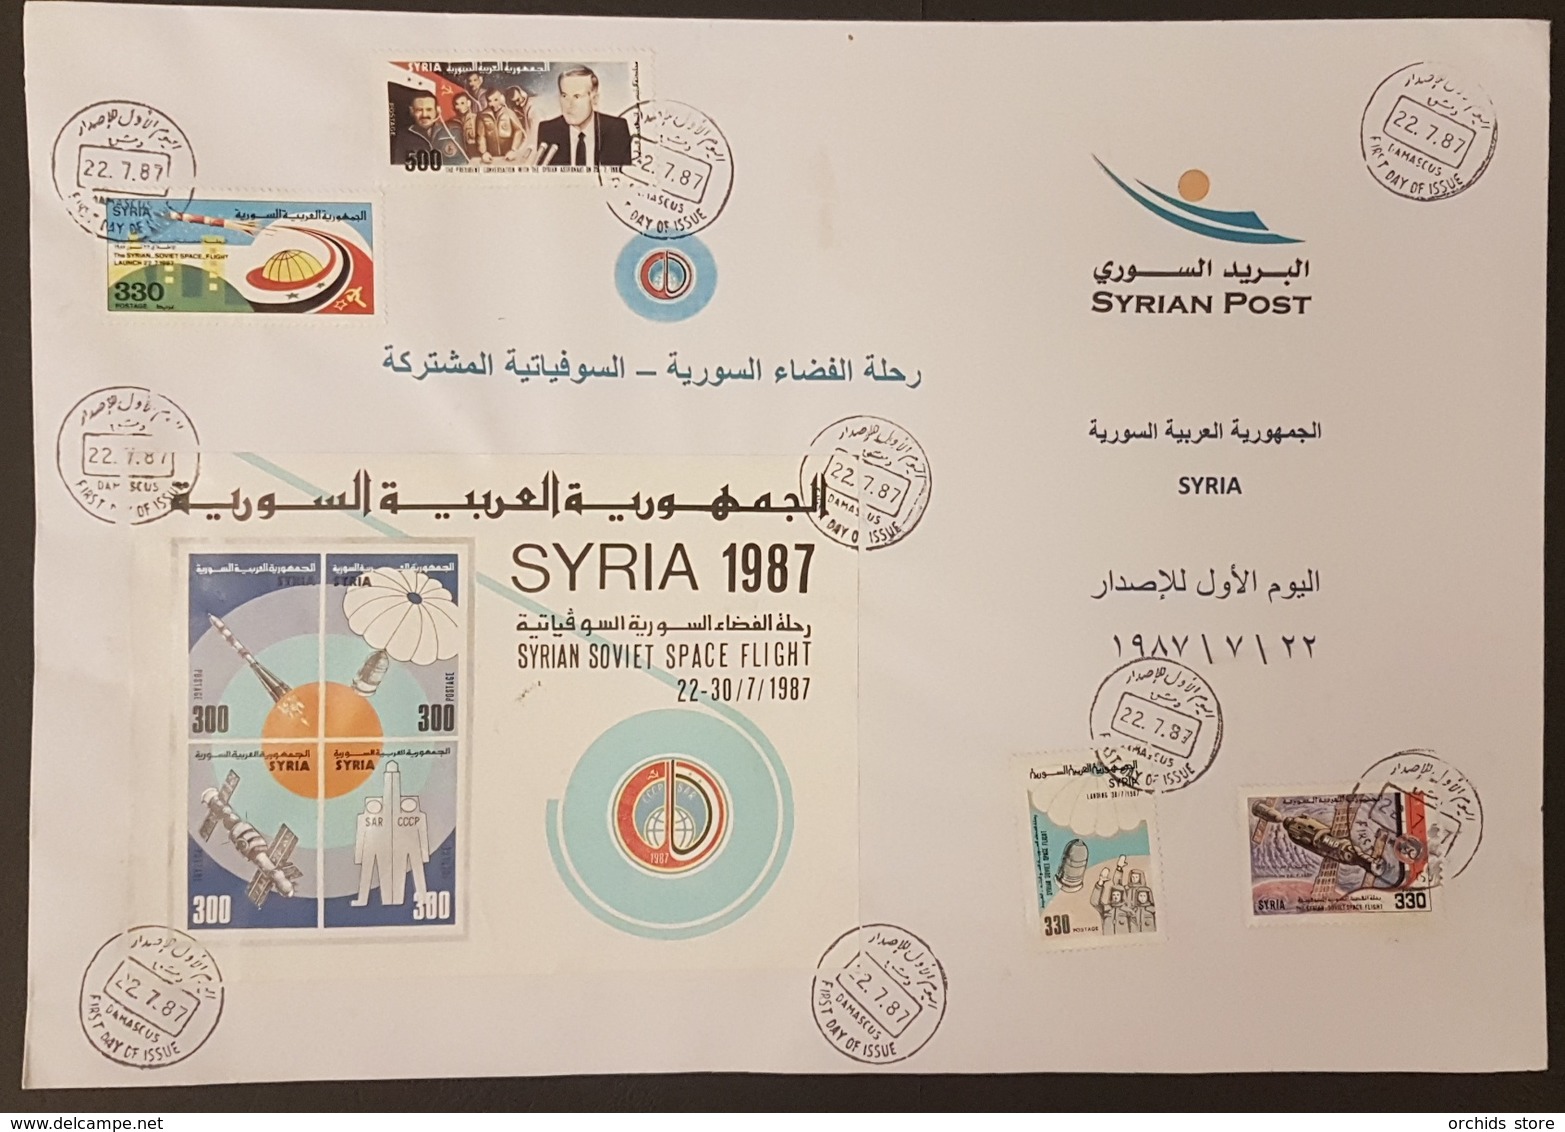 Syria 1987 FDC - Syrian Soviet Space Flight - A4 Size - Syrië